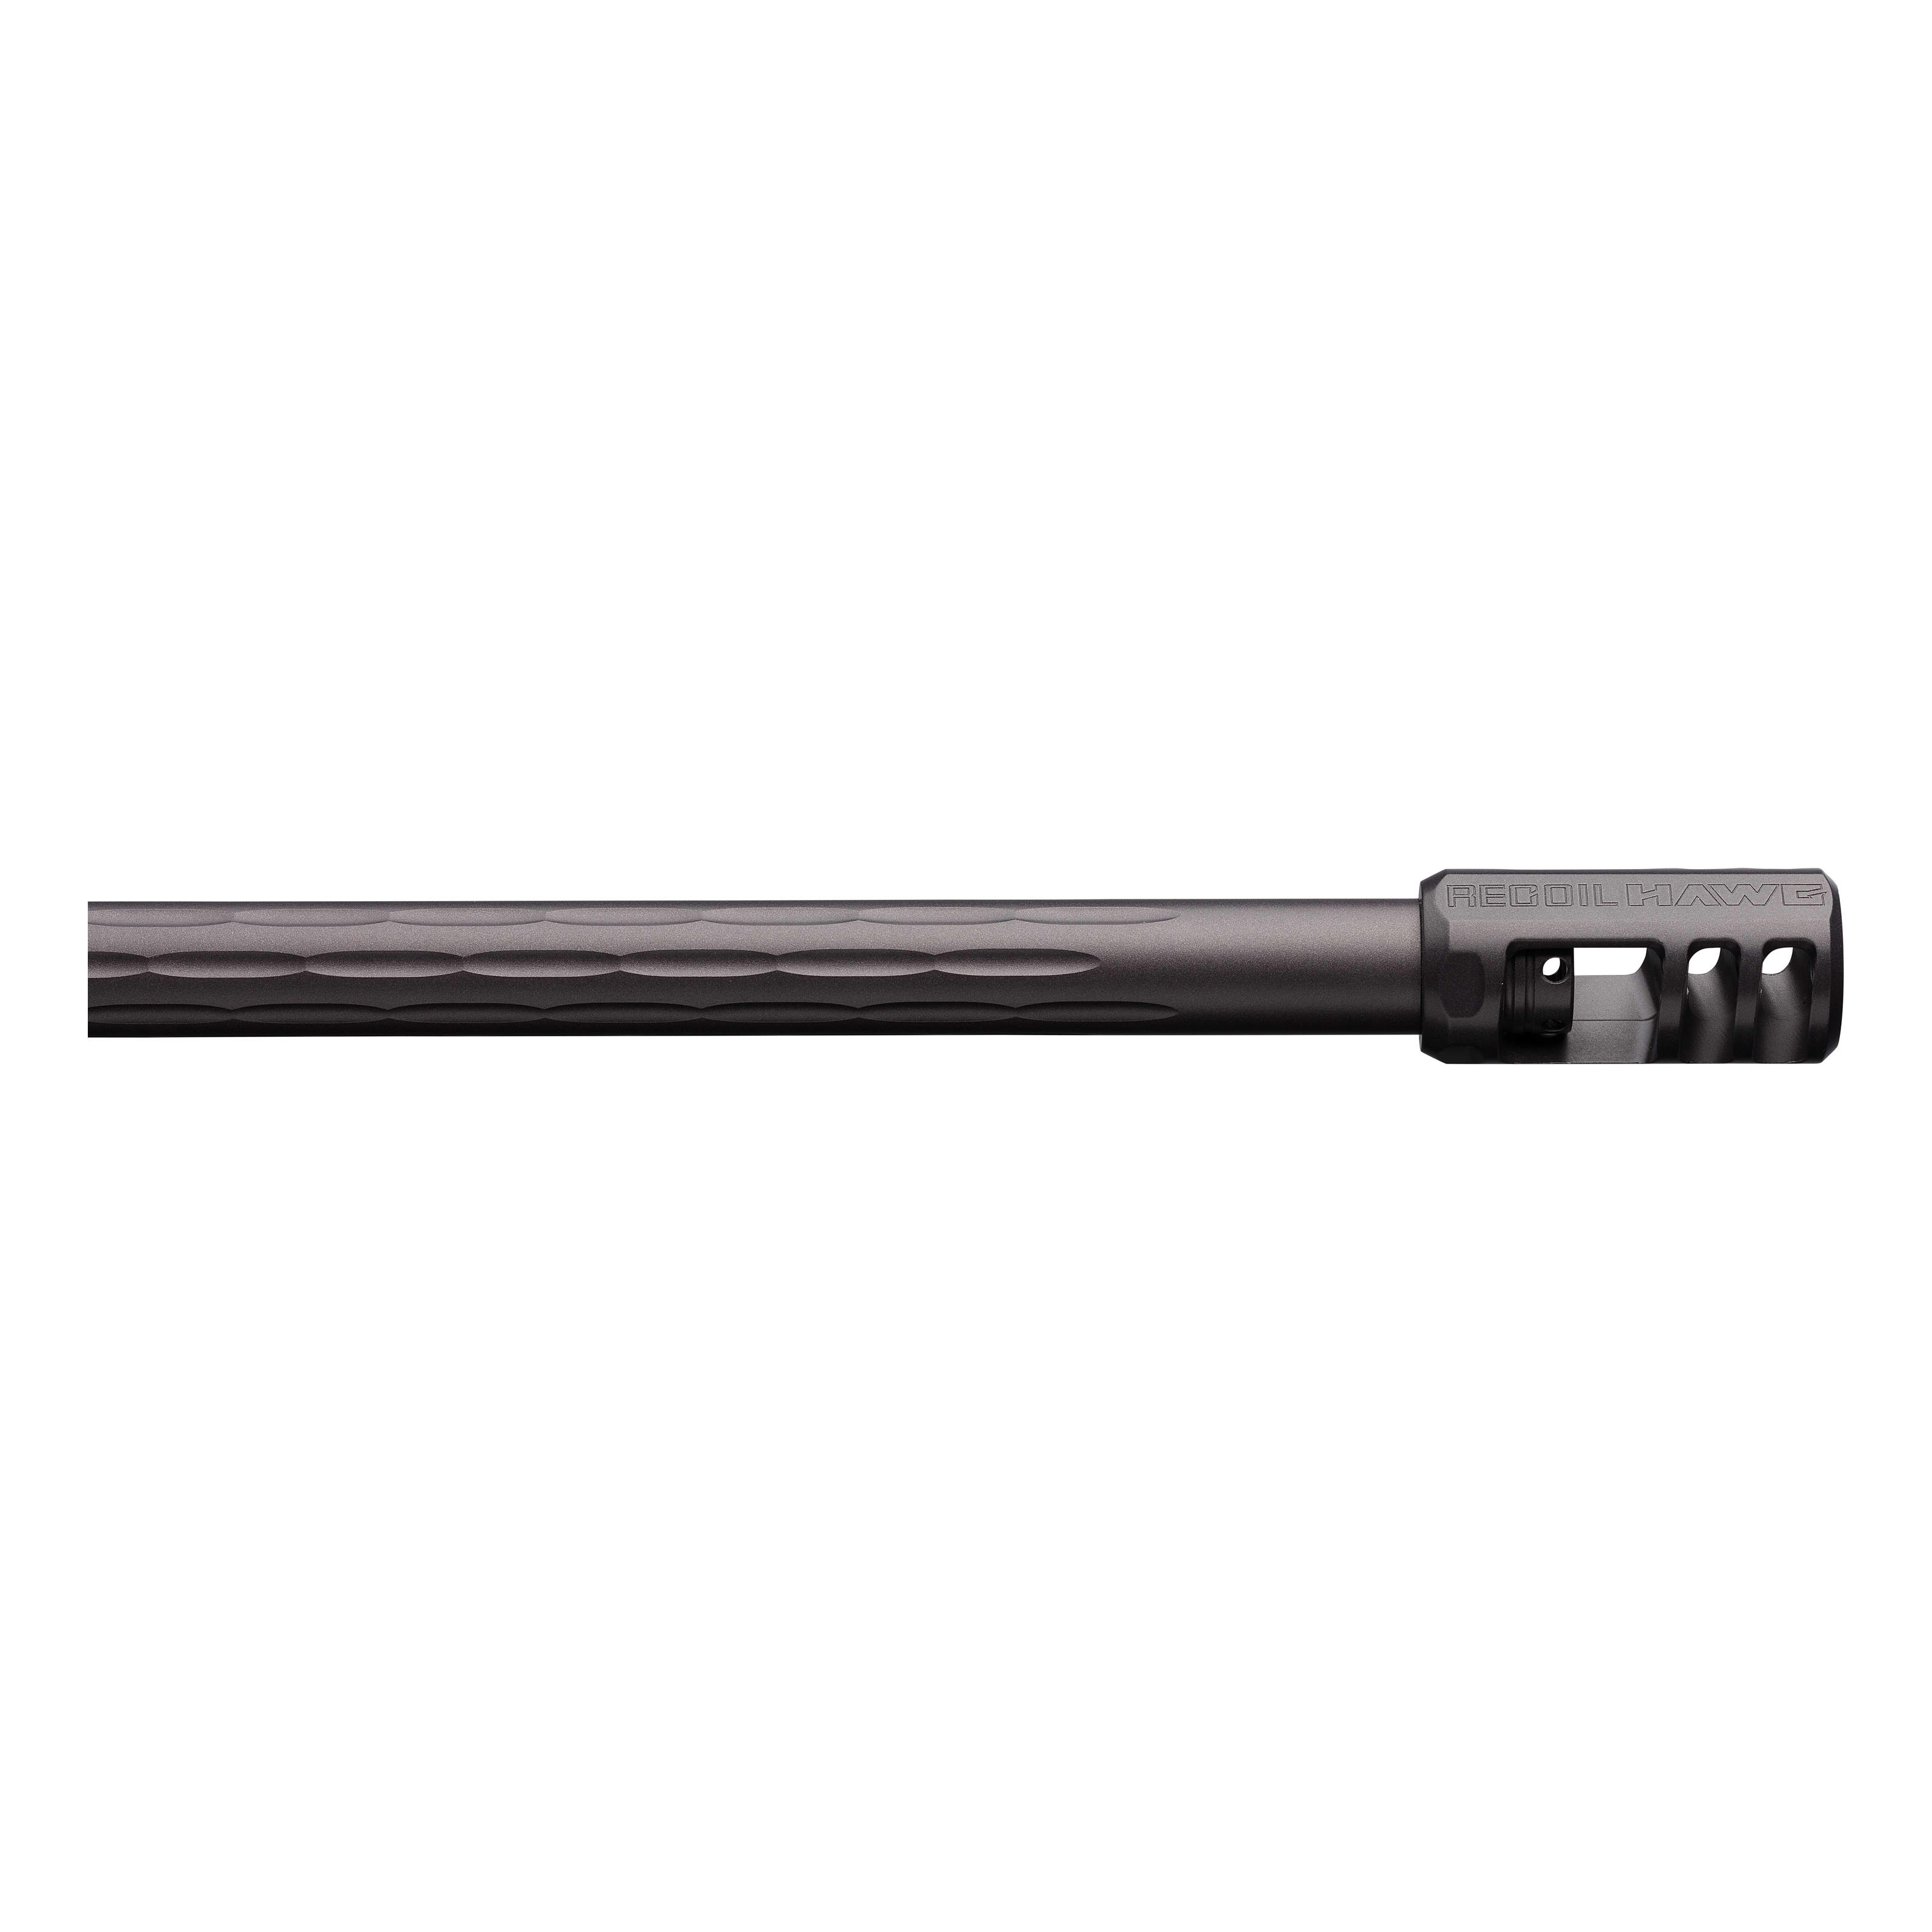 Browning® X-Bolt Pro Long Range Bolt-Action Rifle